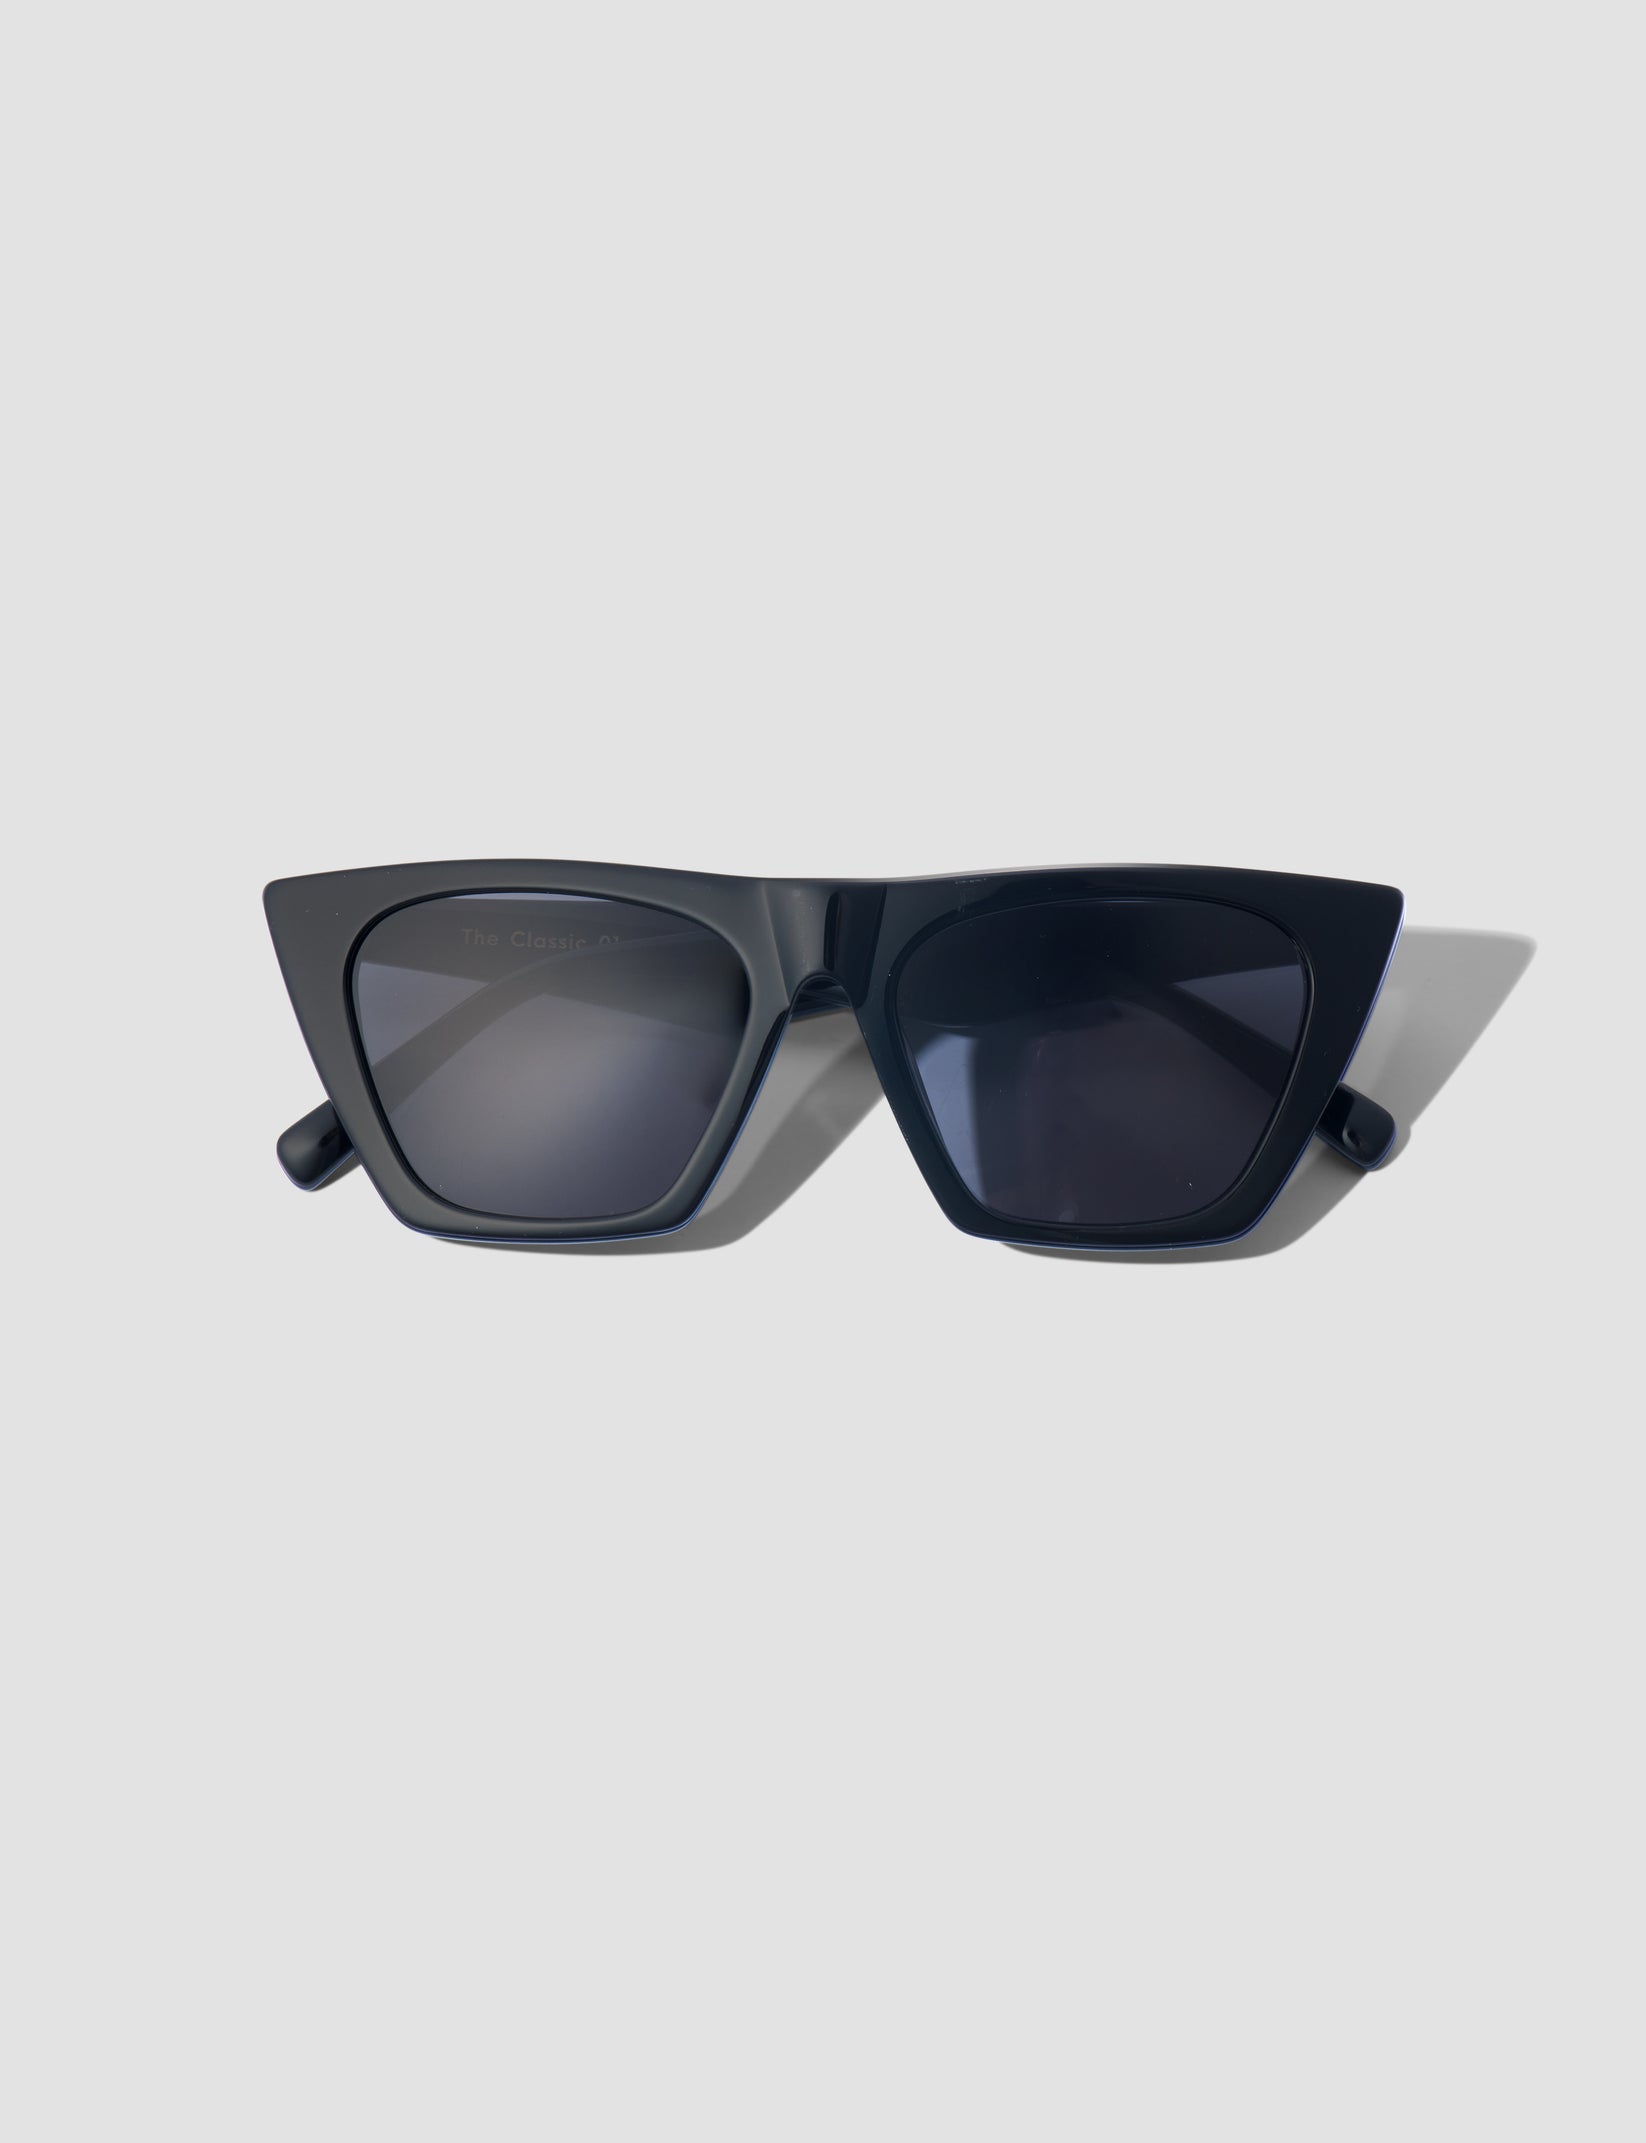 The Classic Sunglasses - Black